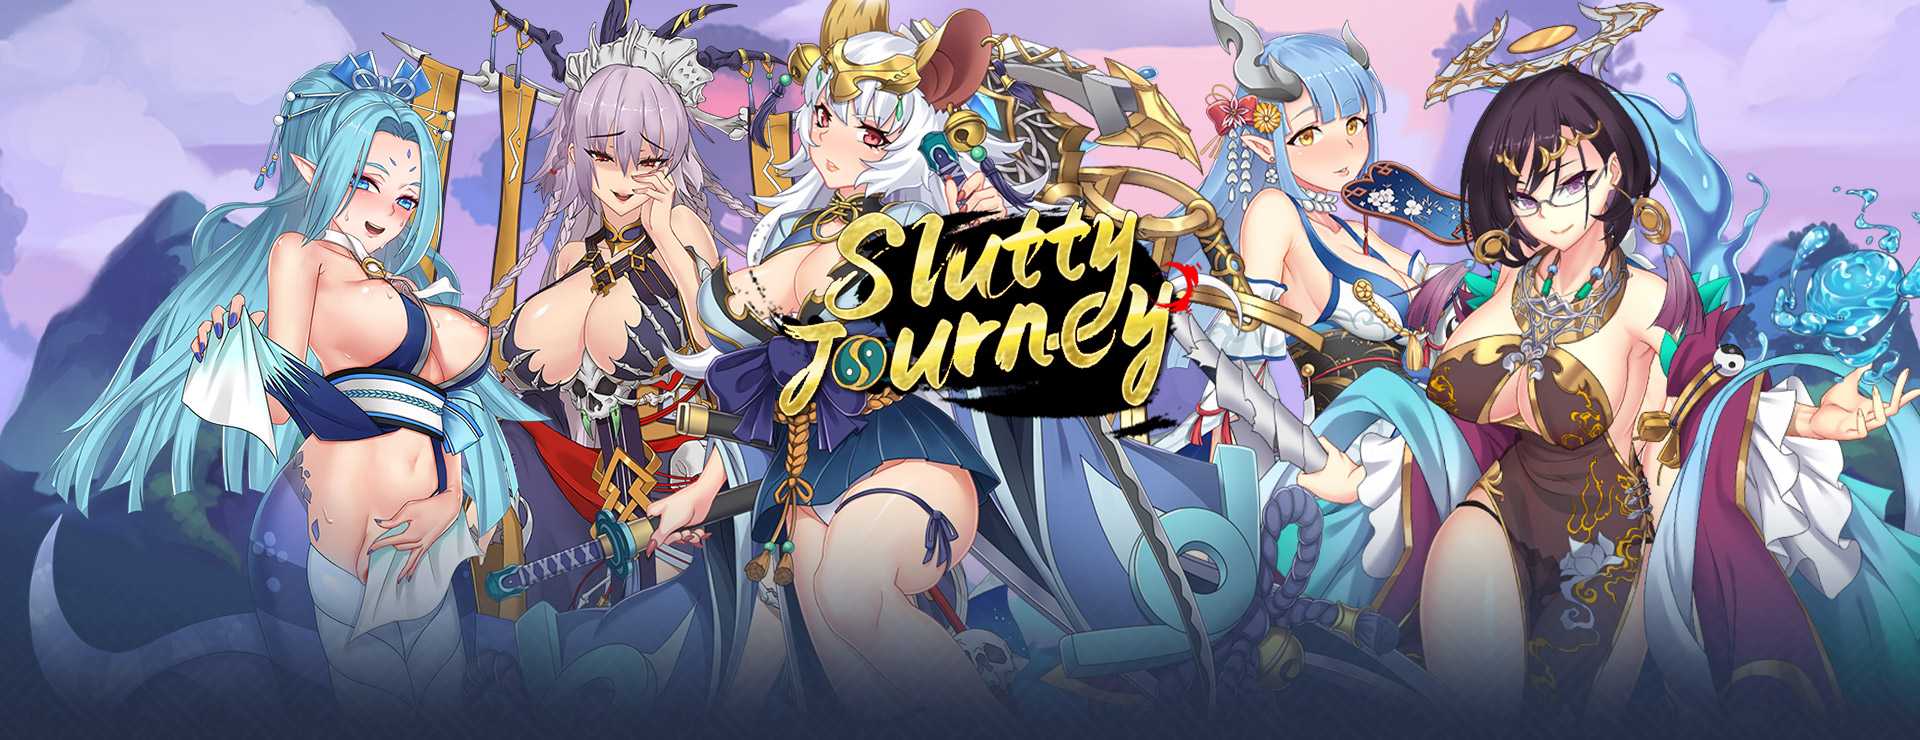 Slutty Journey . - RPG